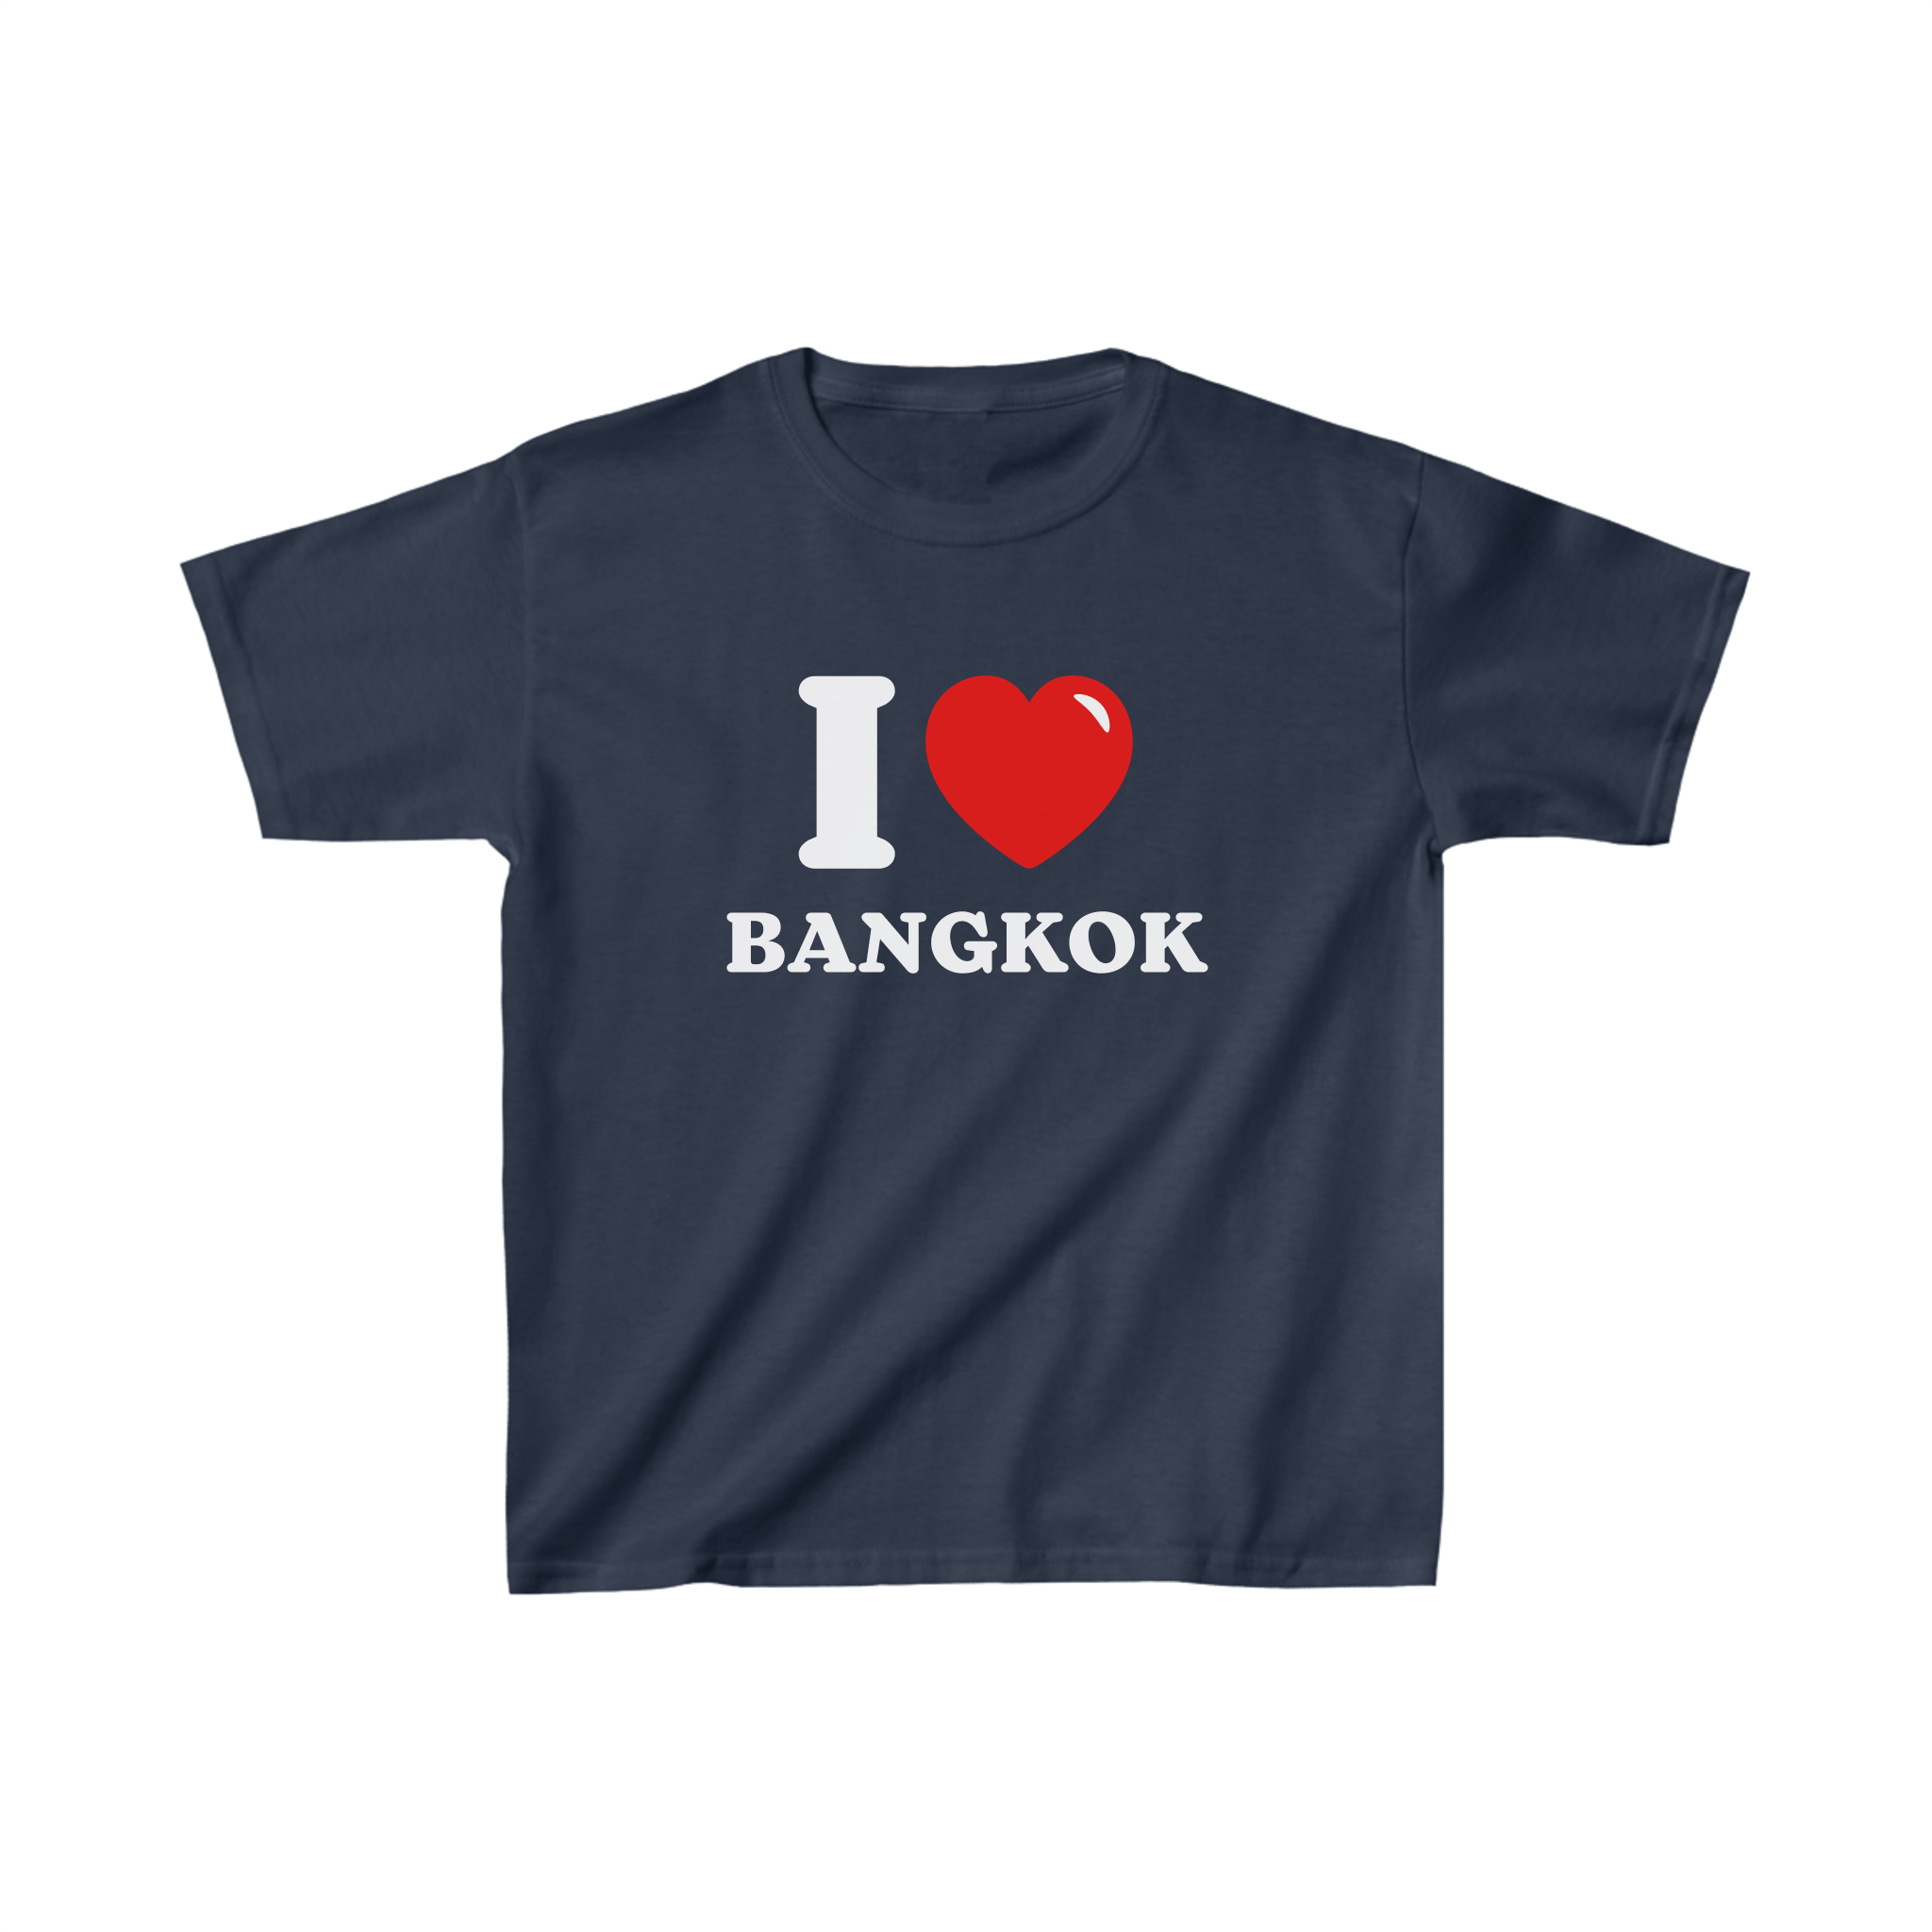 'I love Bangkok' baby tee - In Print We Trust